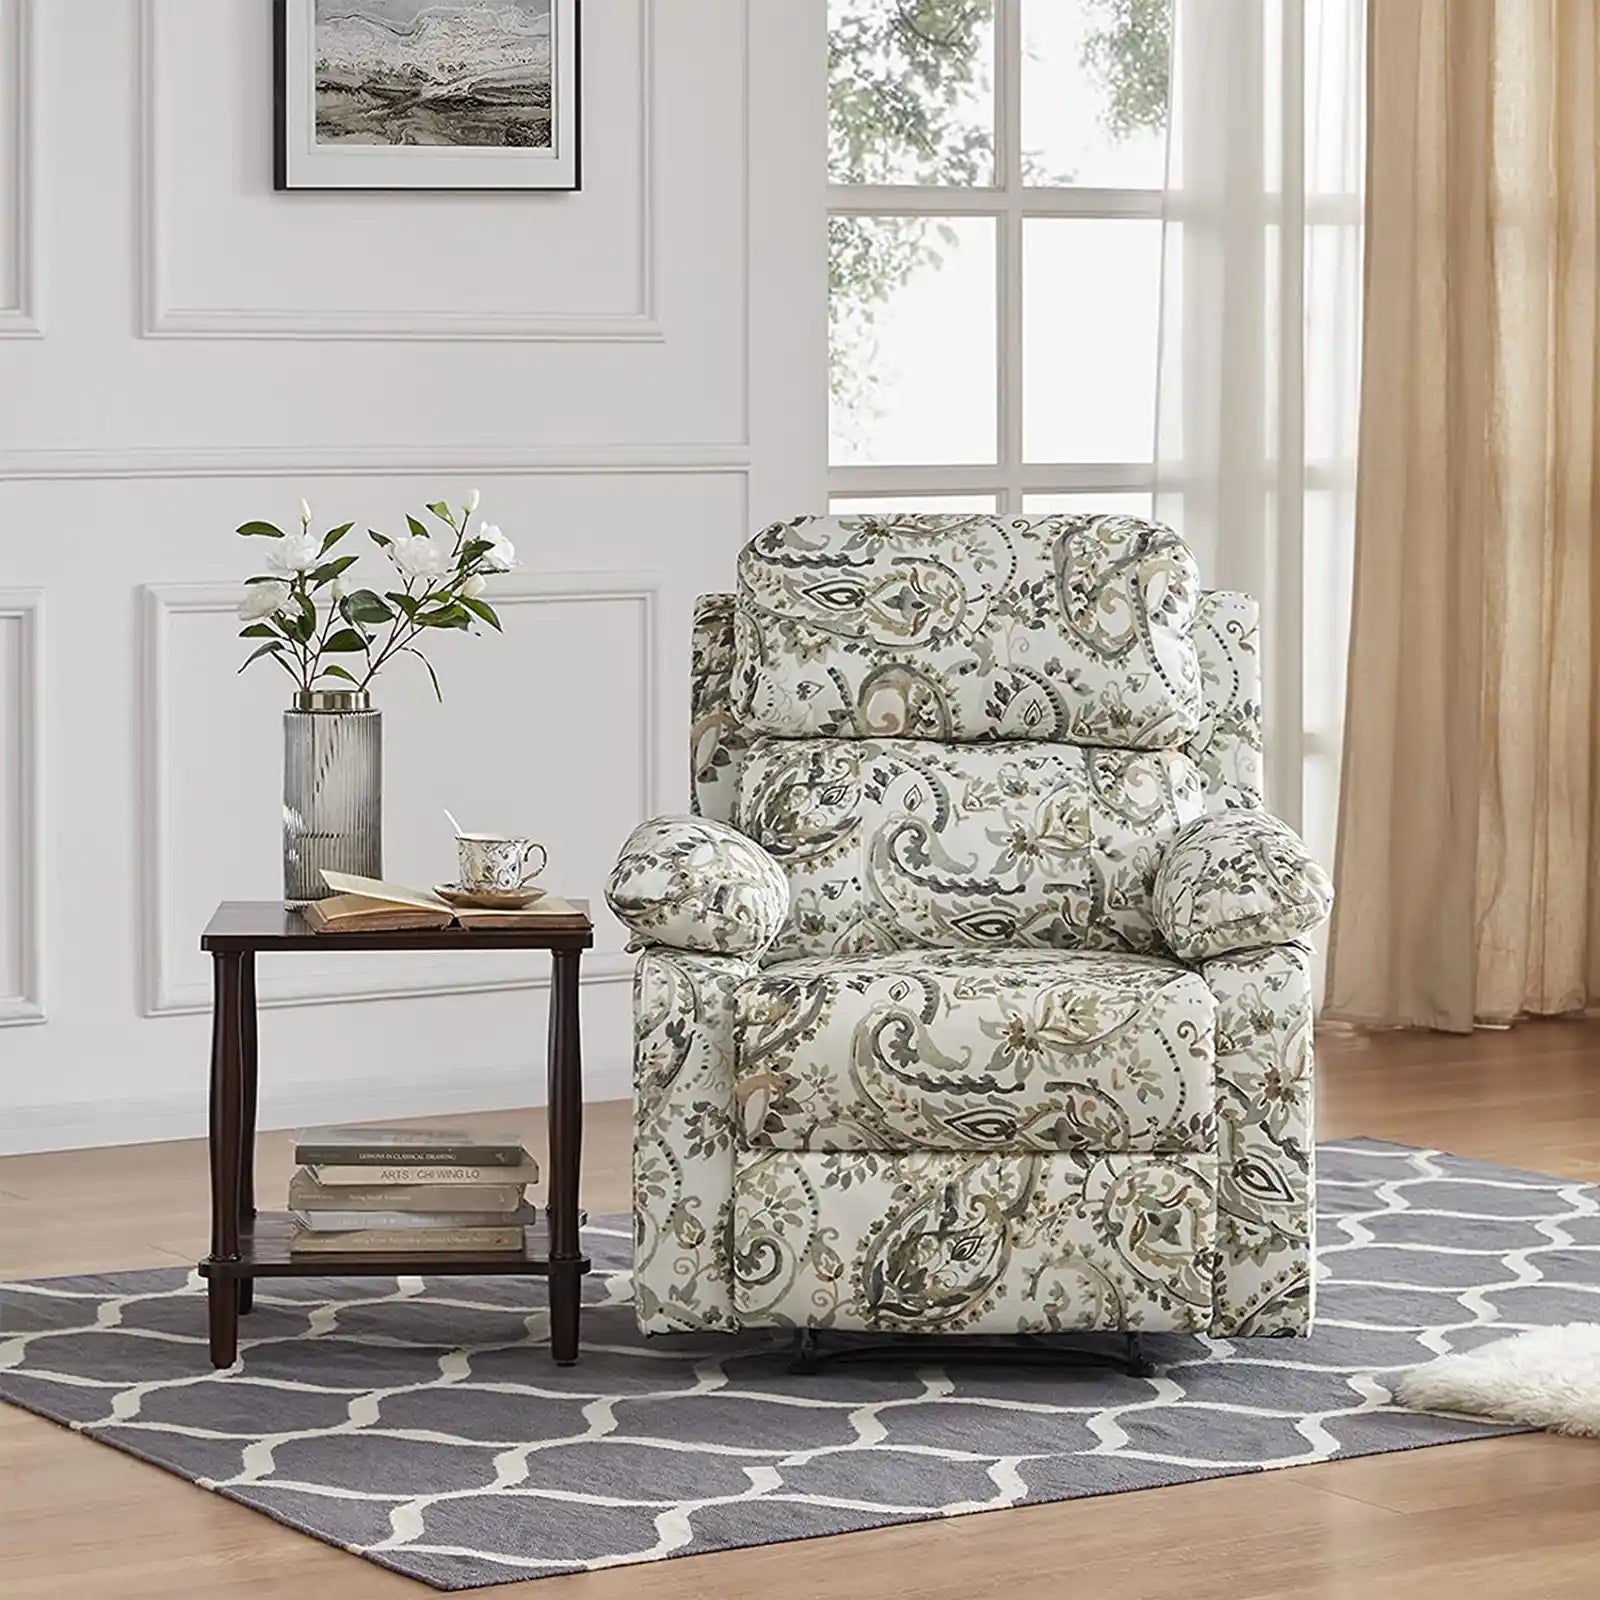 Recliner Chair Breathable Fabric Manual Single Sofa